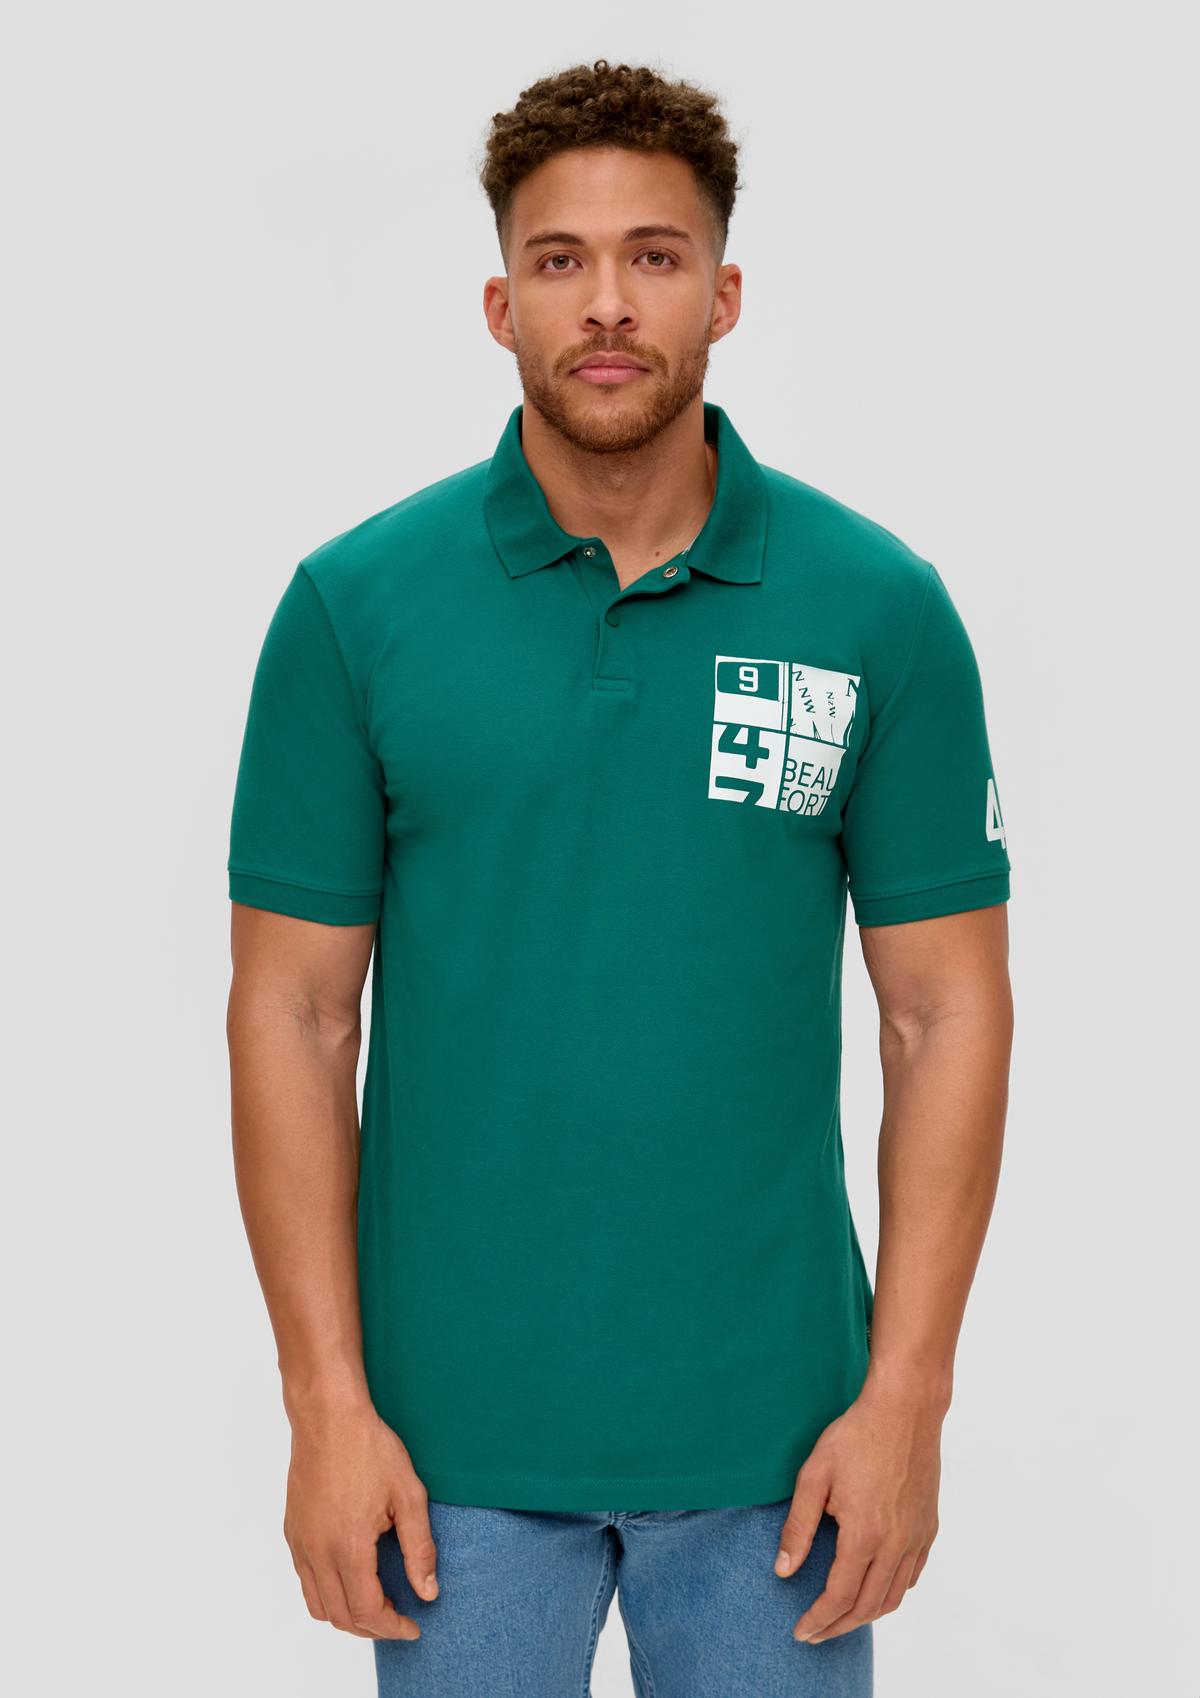 Polo shirt with a minimalist print - navy